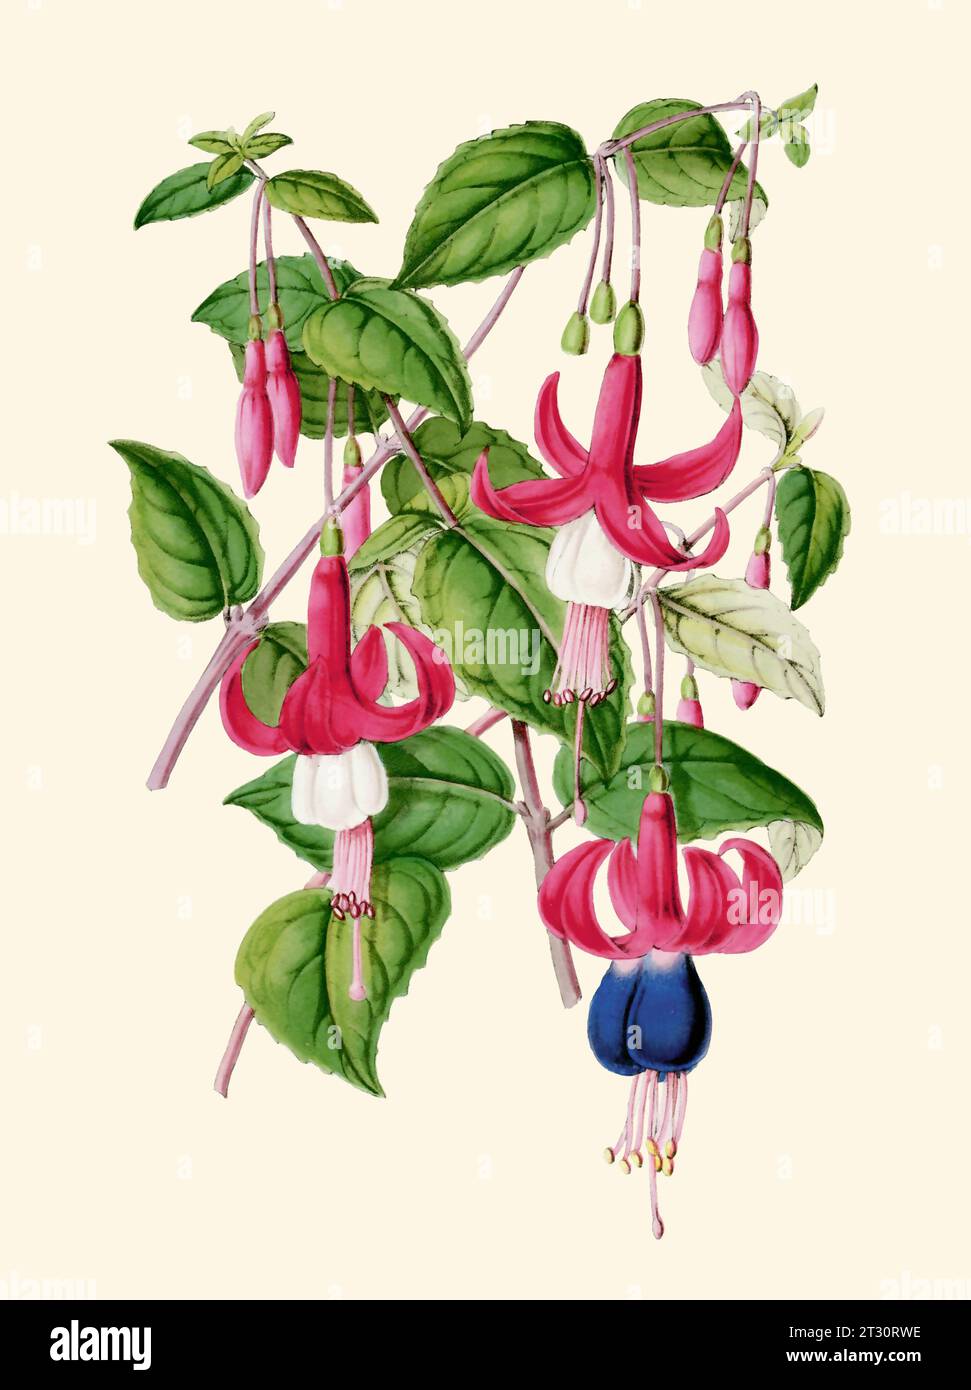 Colorful Flower Illustration: digital vintage-style Fuchsia Flowers on a plain beige background. Stock Photo